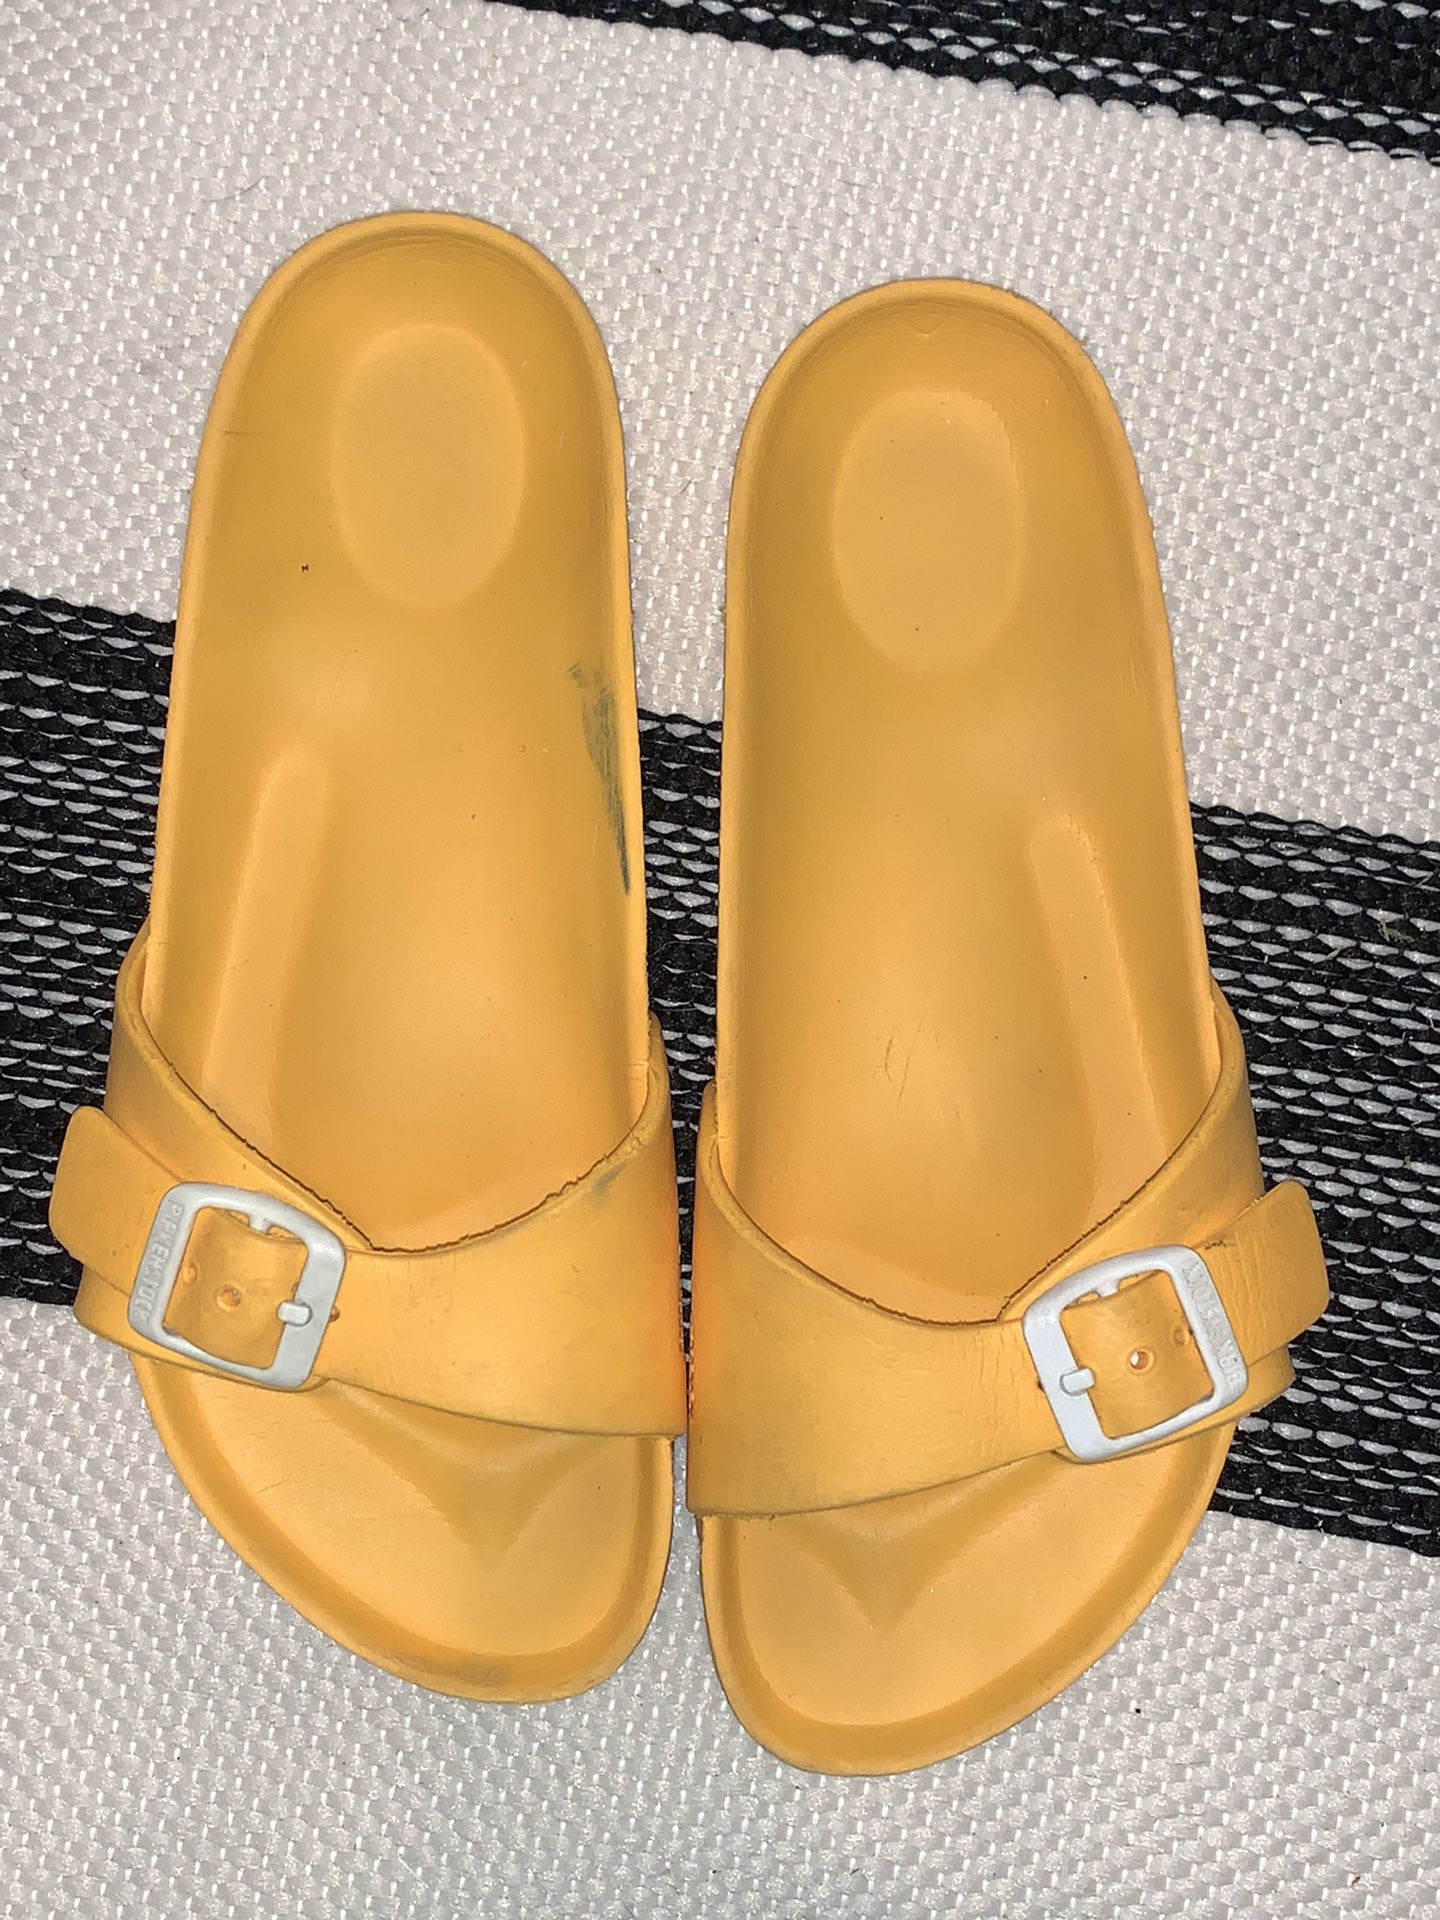 Super cute Women yellow birkenstocks slide on shoes  Some scuffs  Size 36  Us size 5.5 